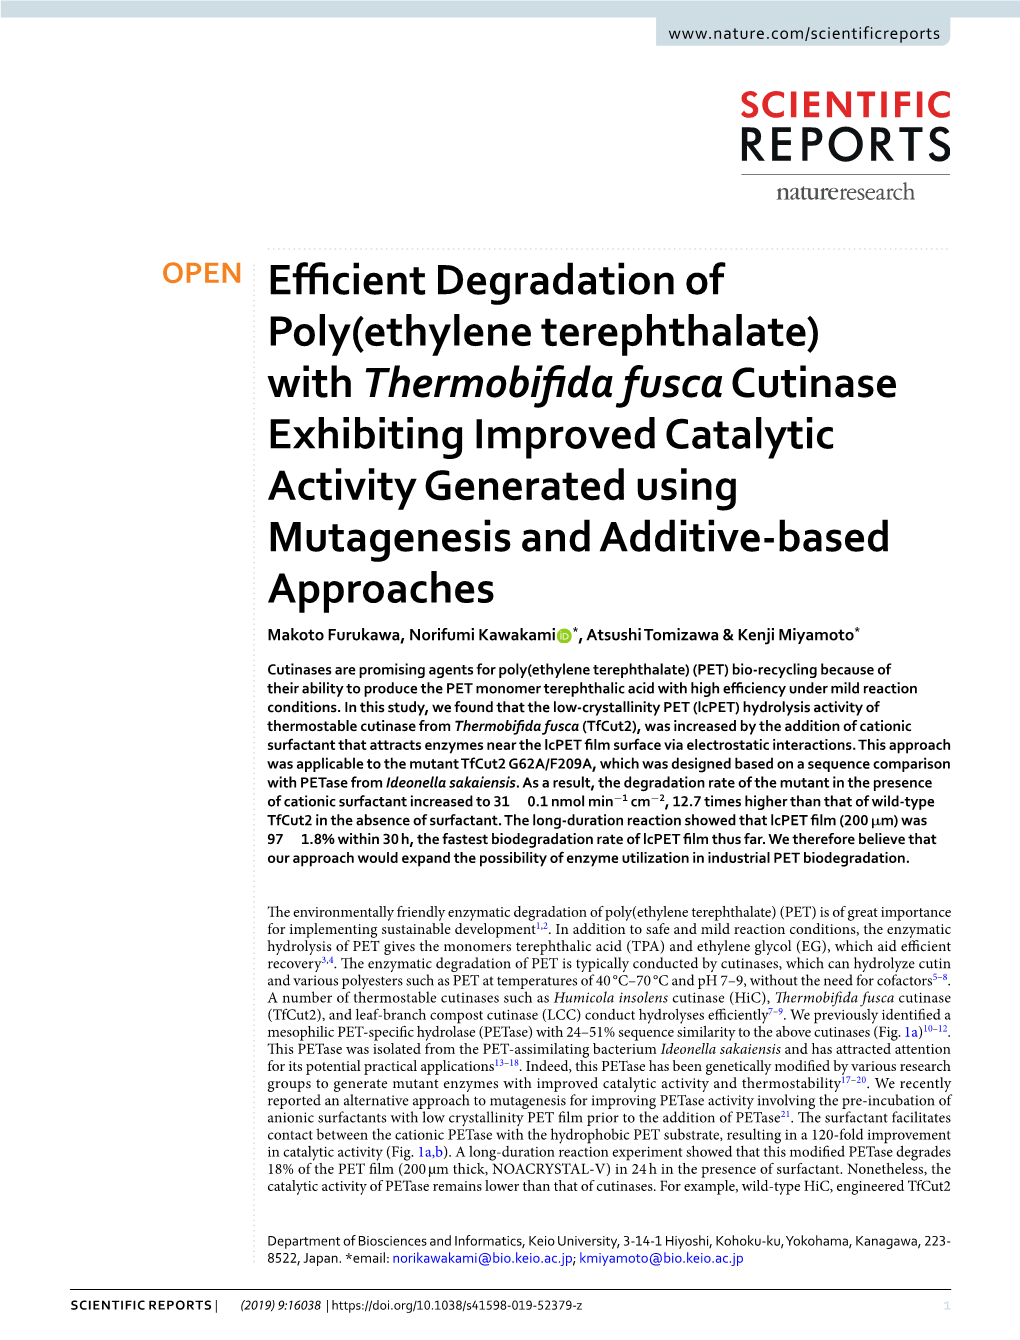 Efficient Degradation of Poly(Ethylene Terephthalate)